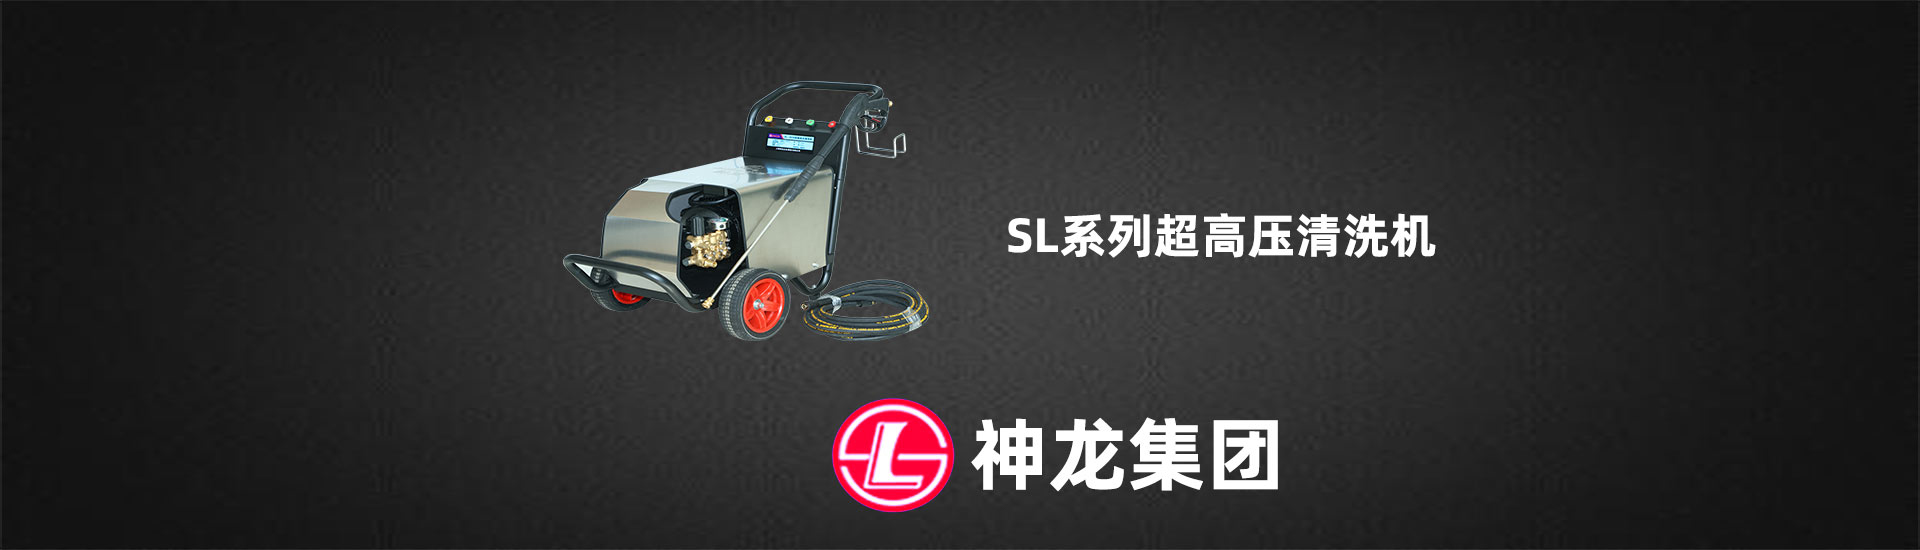 SL-1522、2015、2515型清洗机-第一张幻灯大图